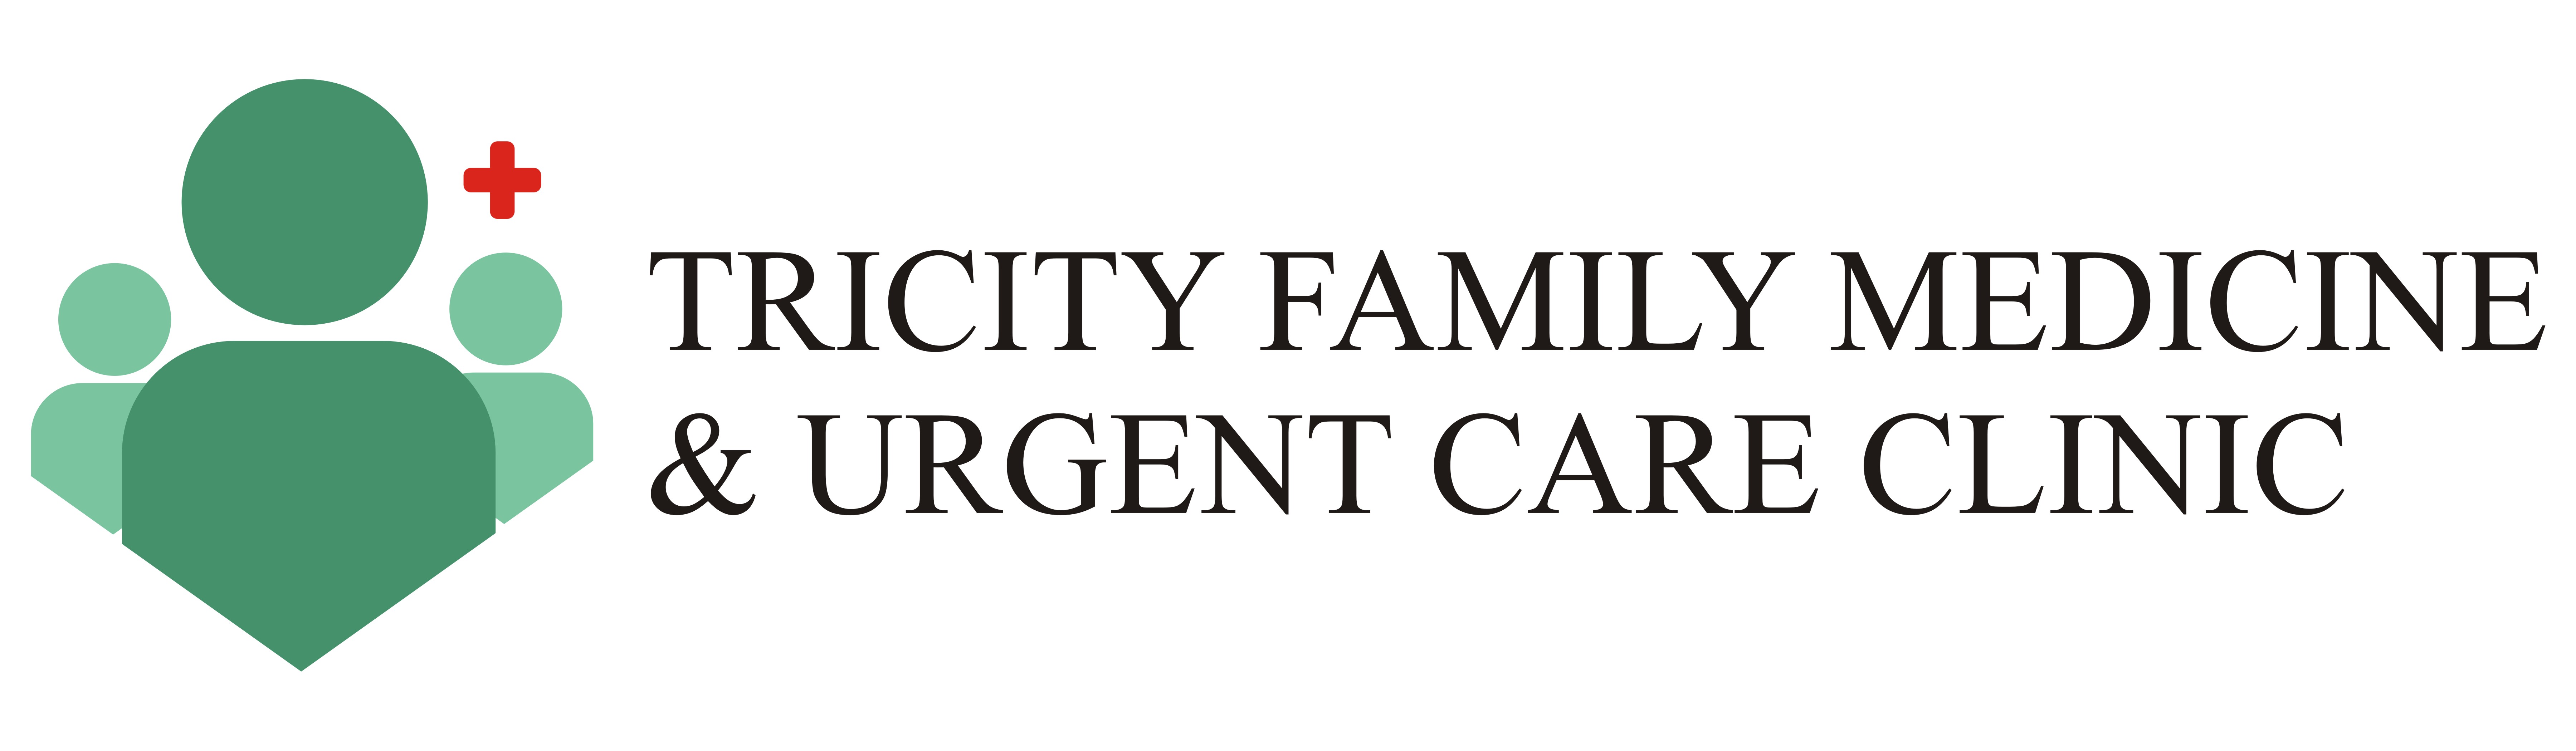 Tricity Family Medicine & Urgent Care Clinic